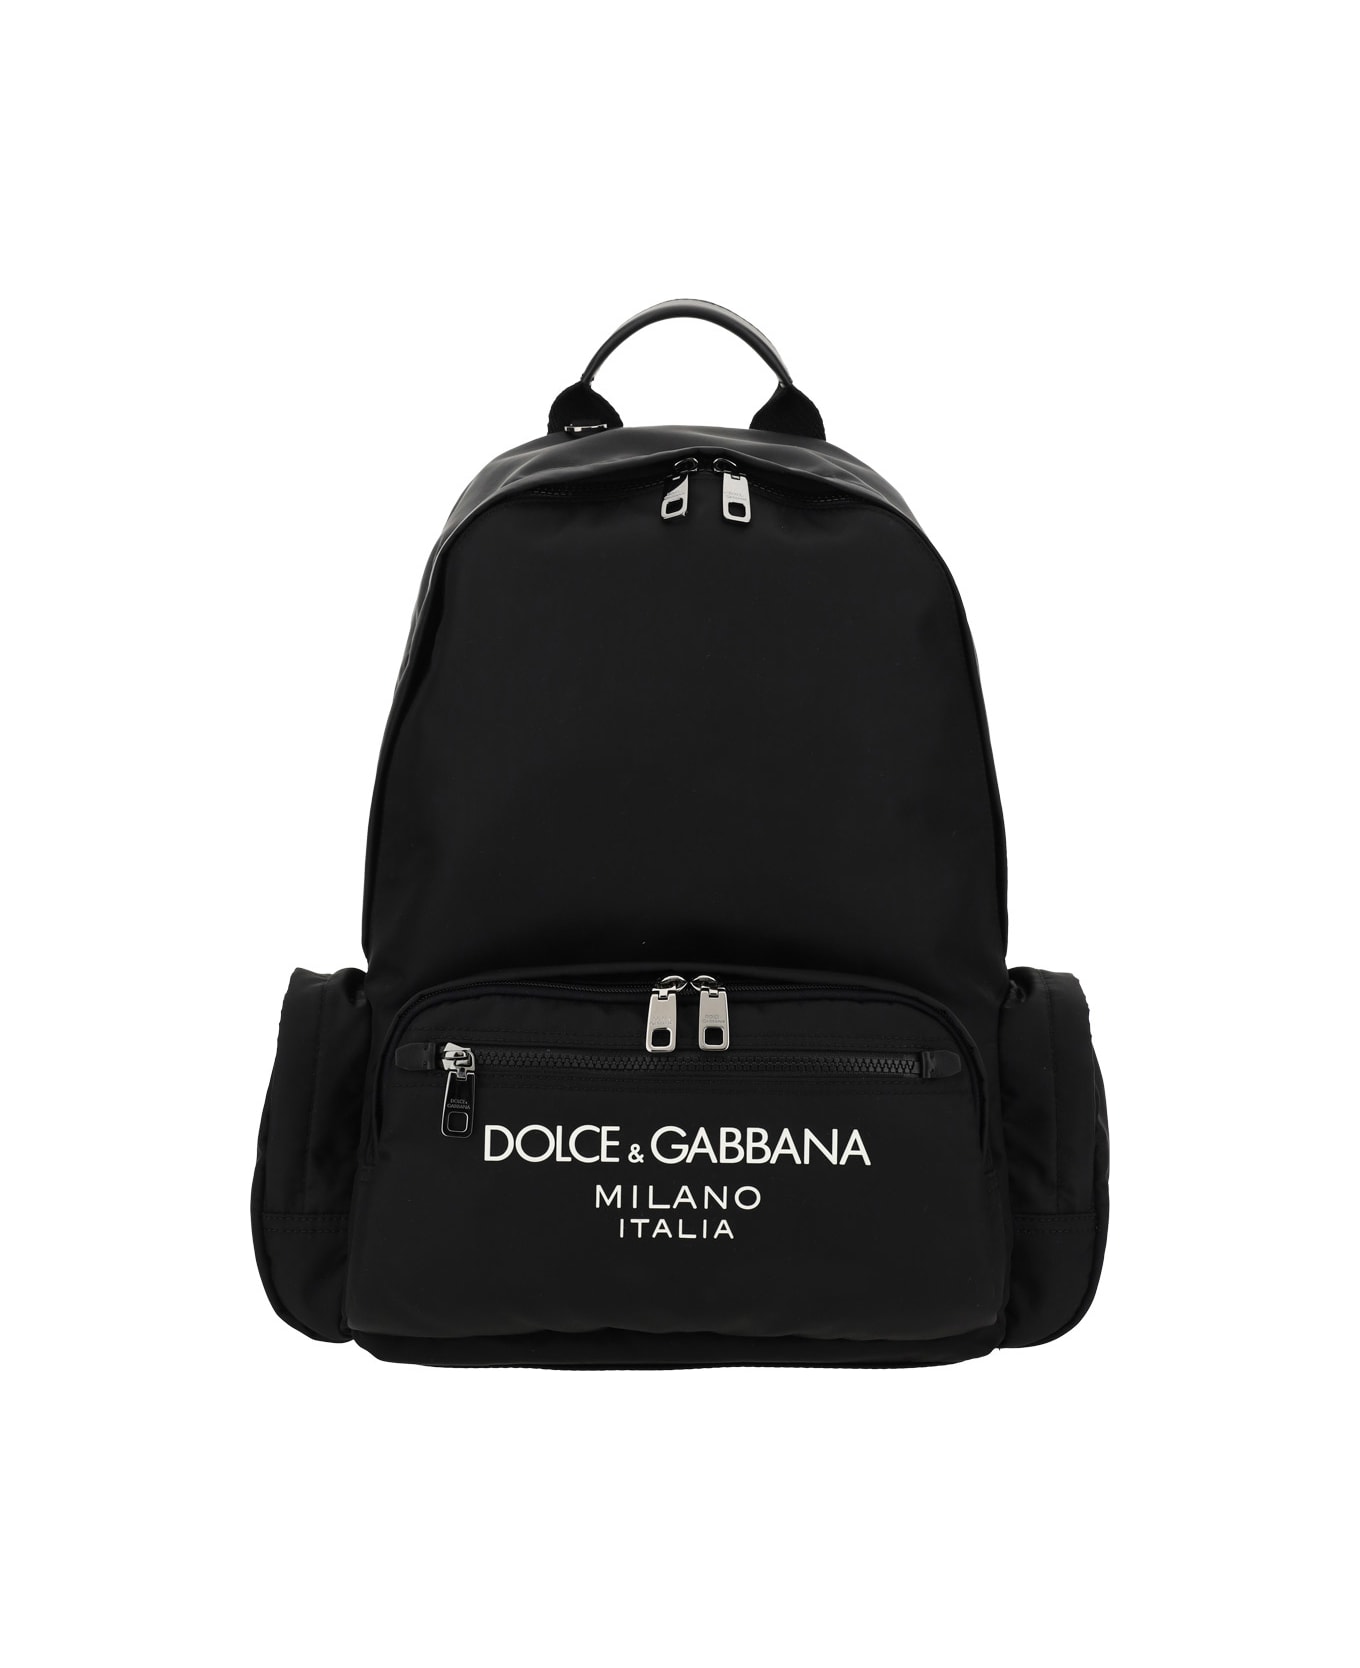 Dolce & Gabbana Backpack - Nero/nero バックパック